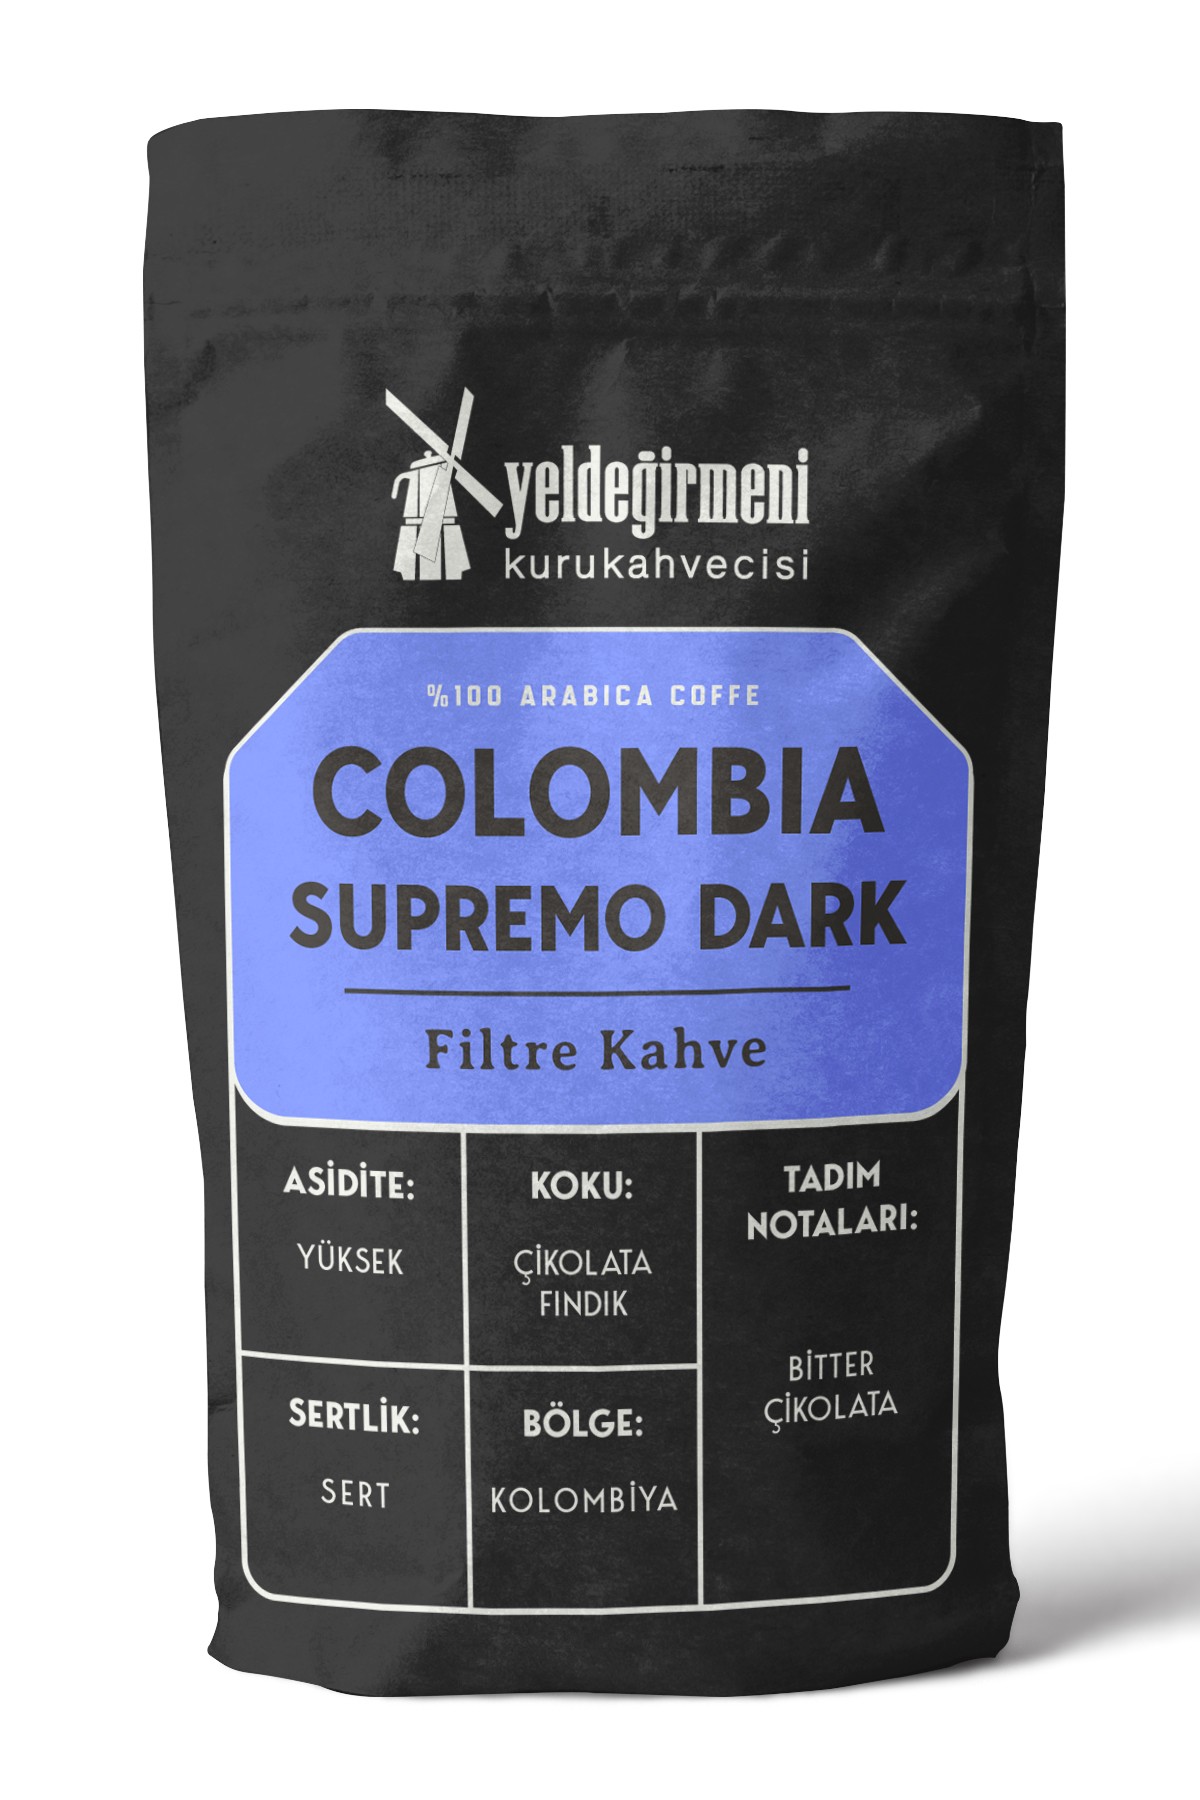 Colombiya Supremo Dark Filtre Kahve